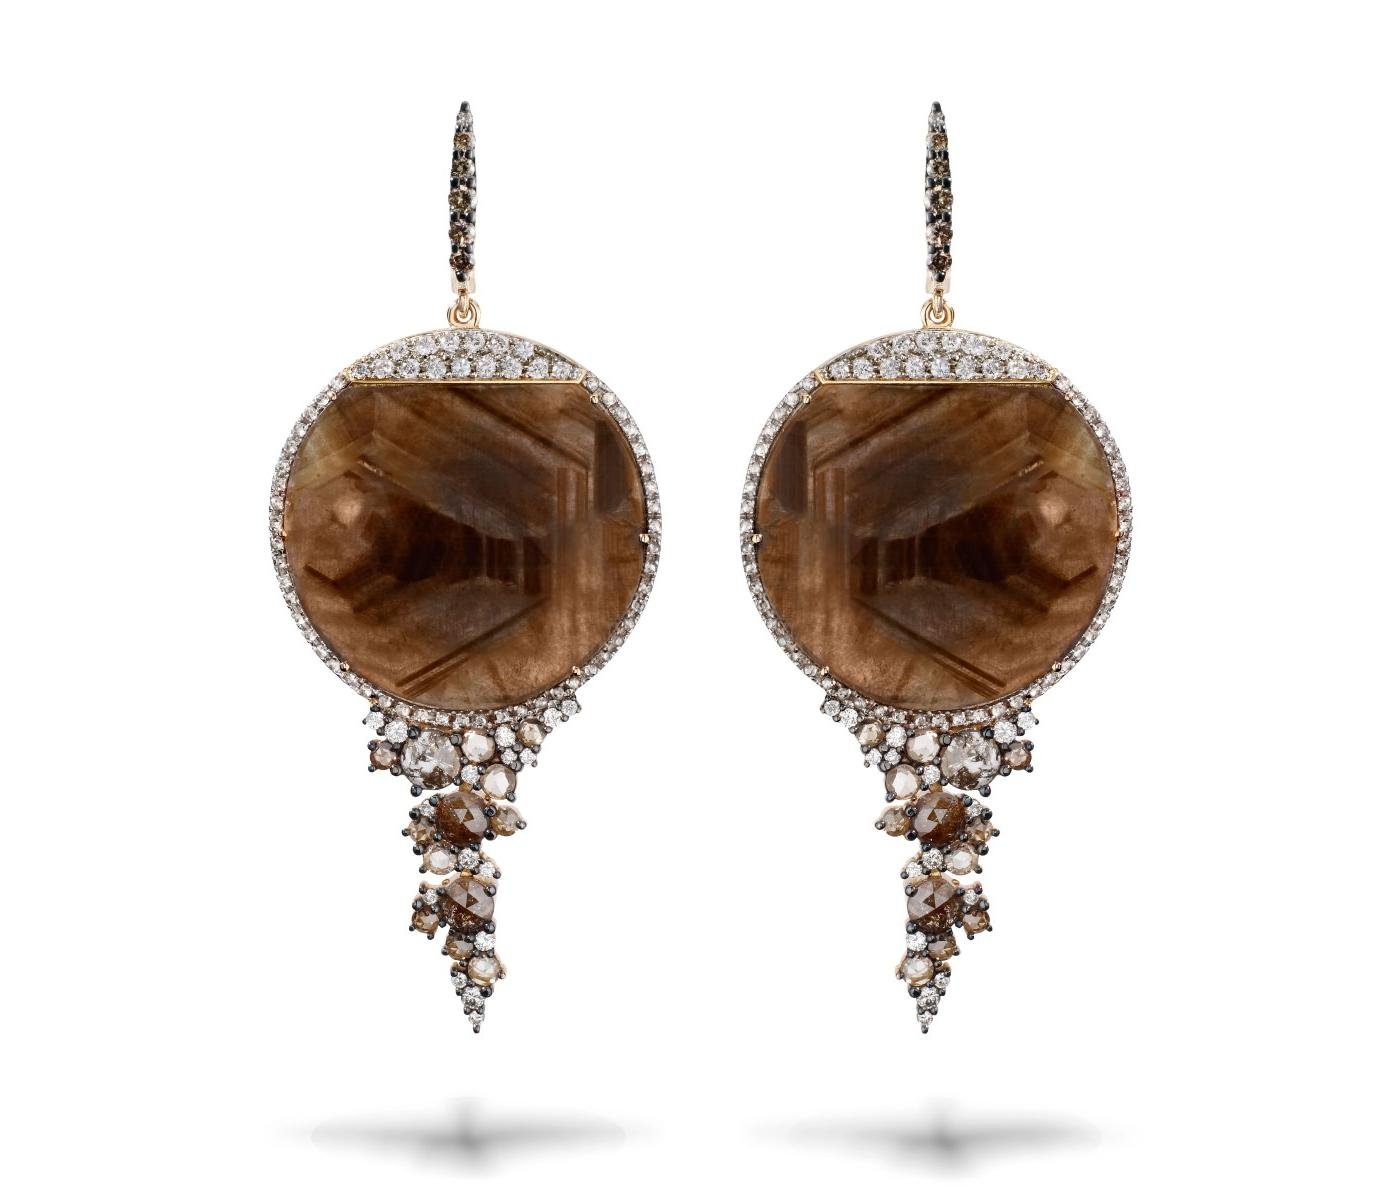 Earrings by Brusi